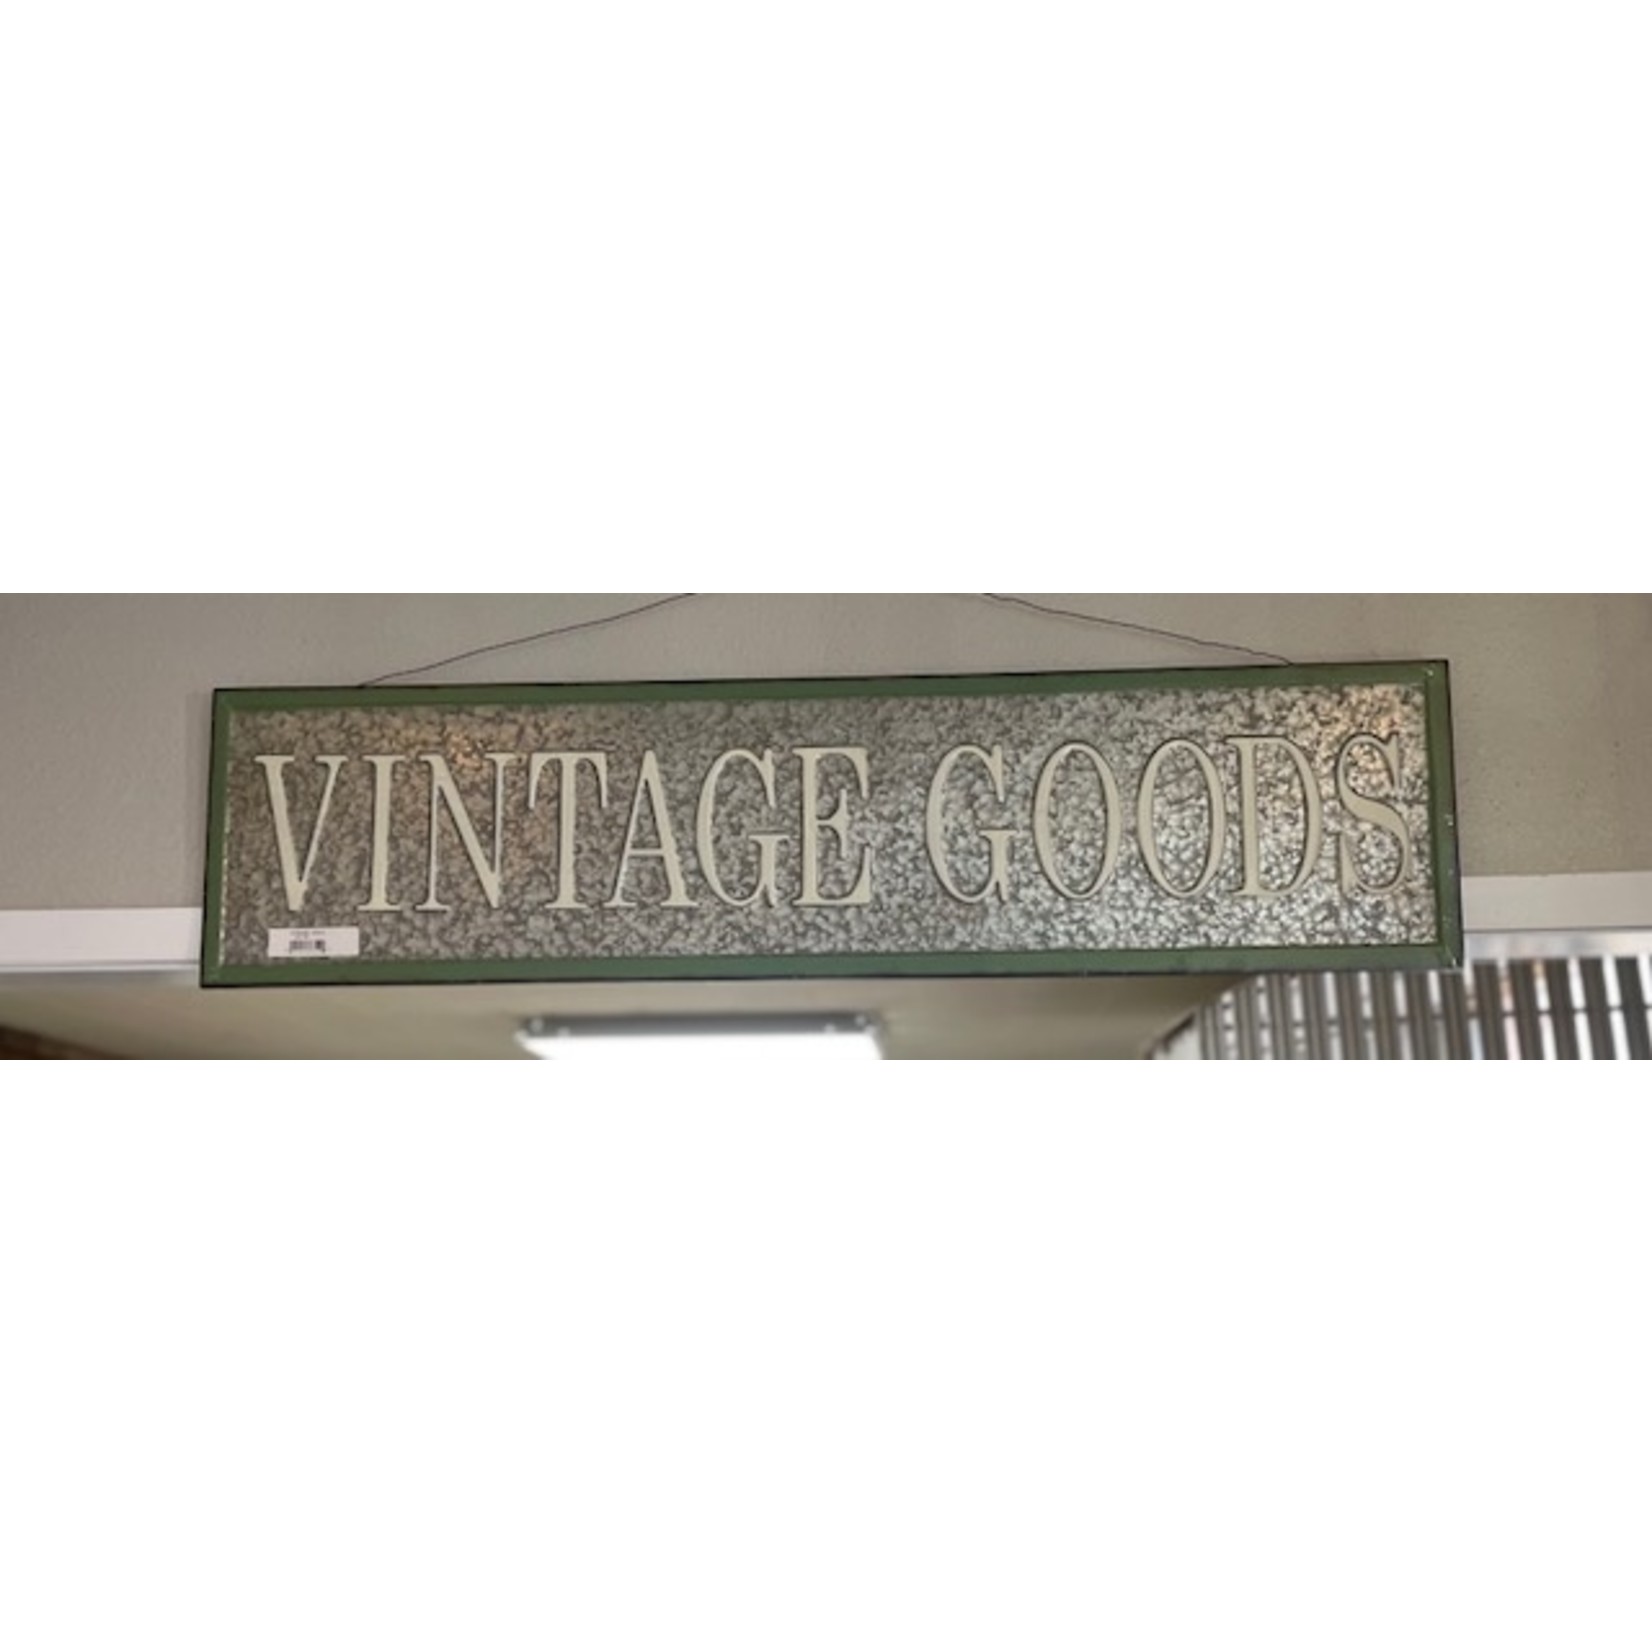 W.A.S Vintage Goods